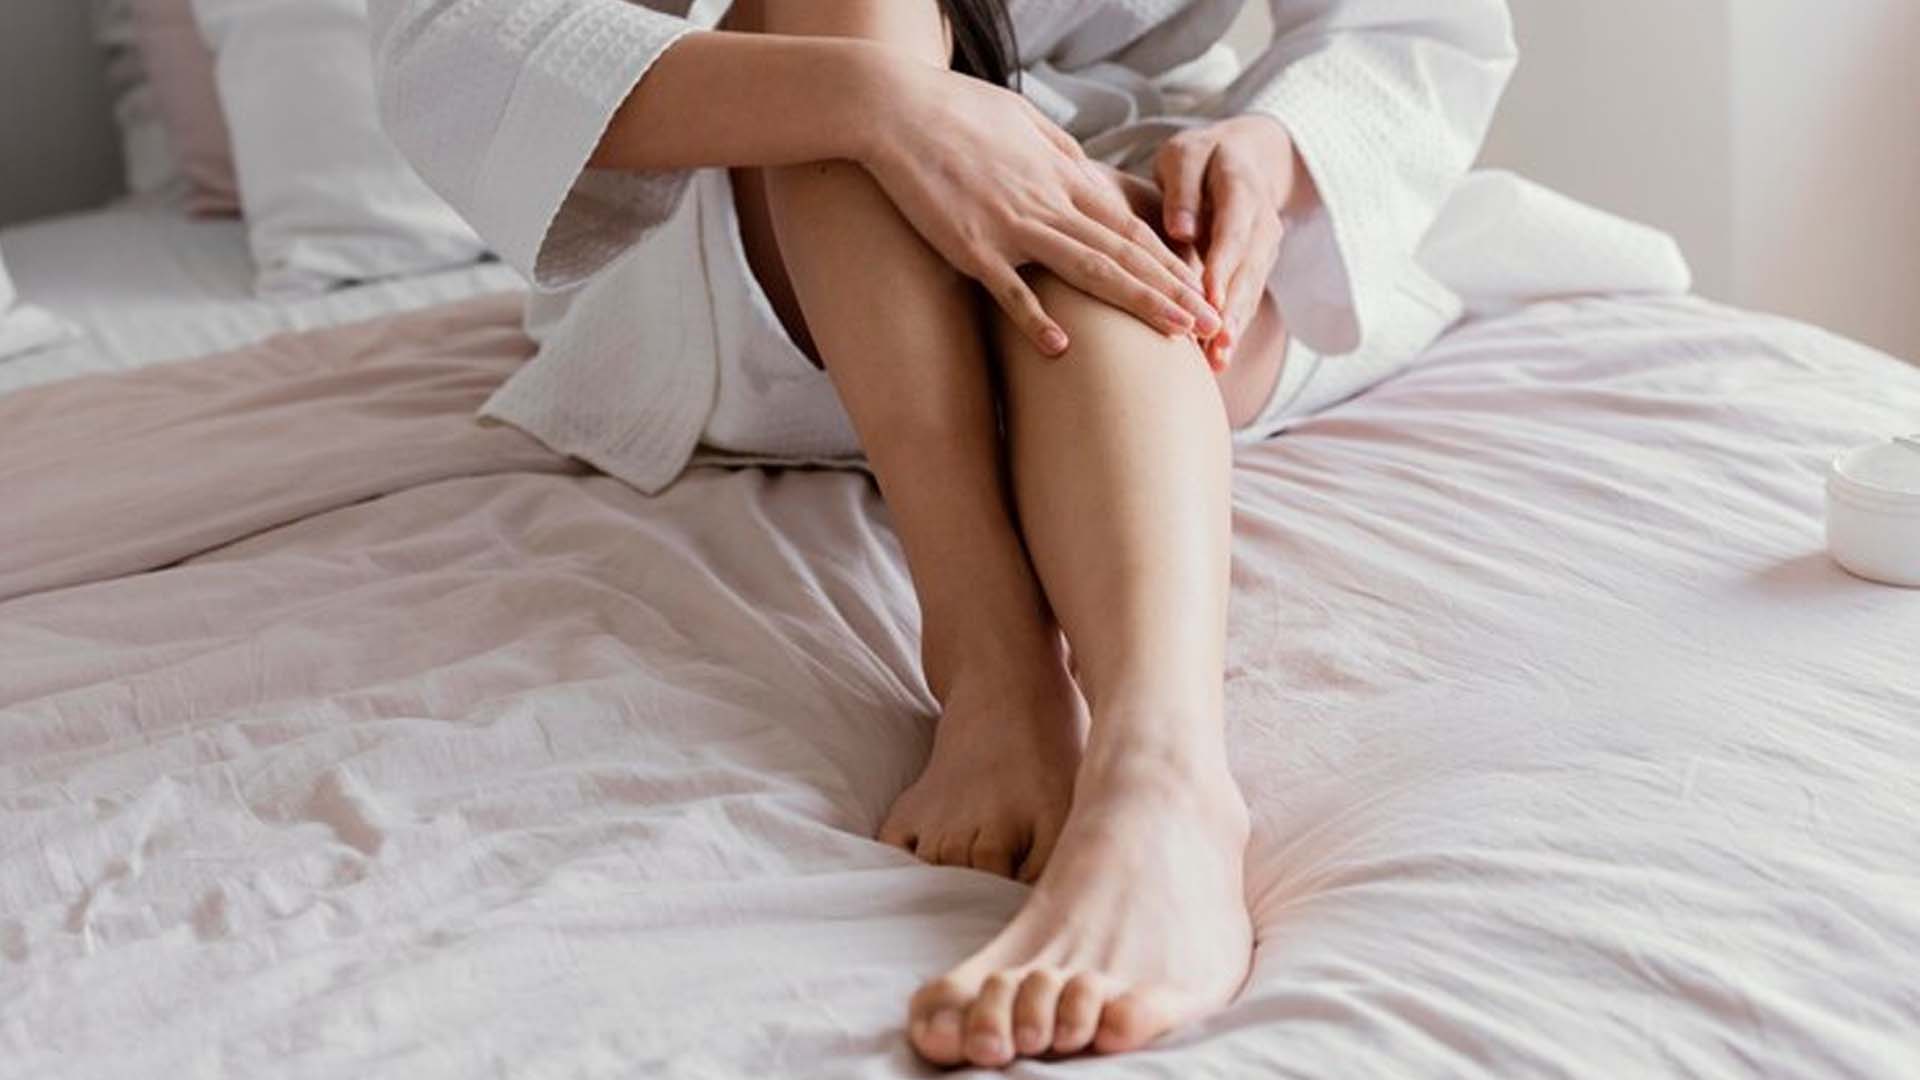 Leg and Knee pain at Night